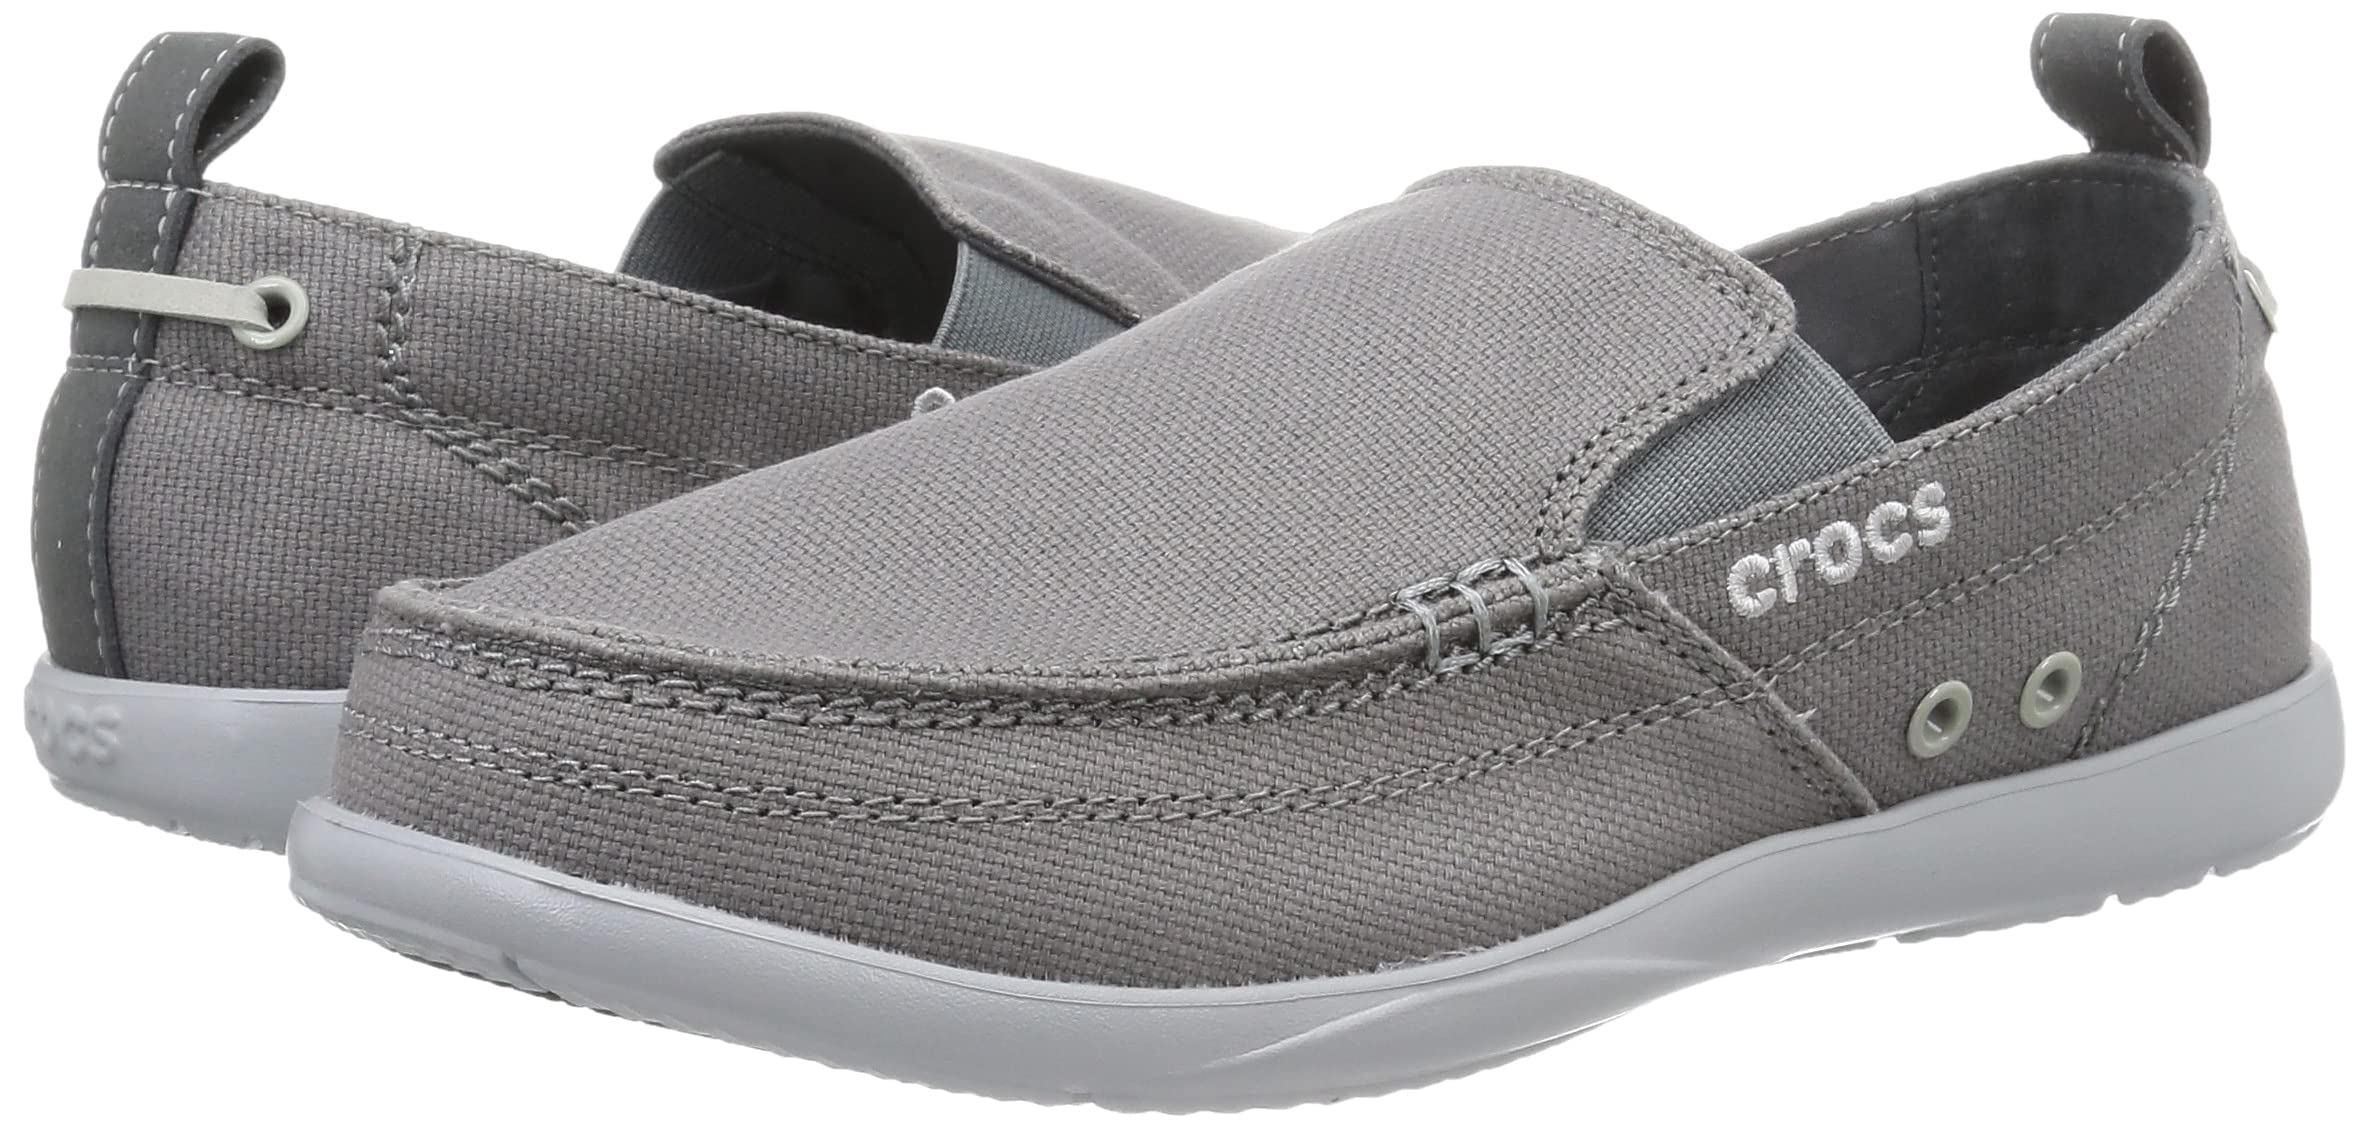 Crocs Men's Walu Slip On Loafer | Casual Men's Loafers | Walking Shoes for Men